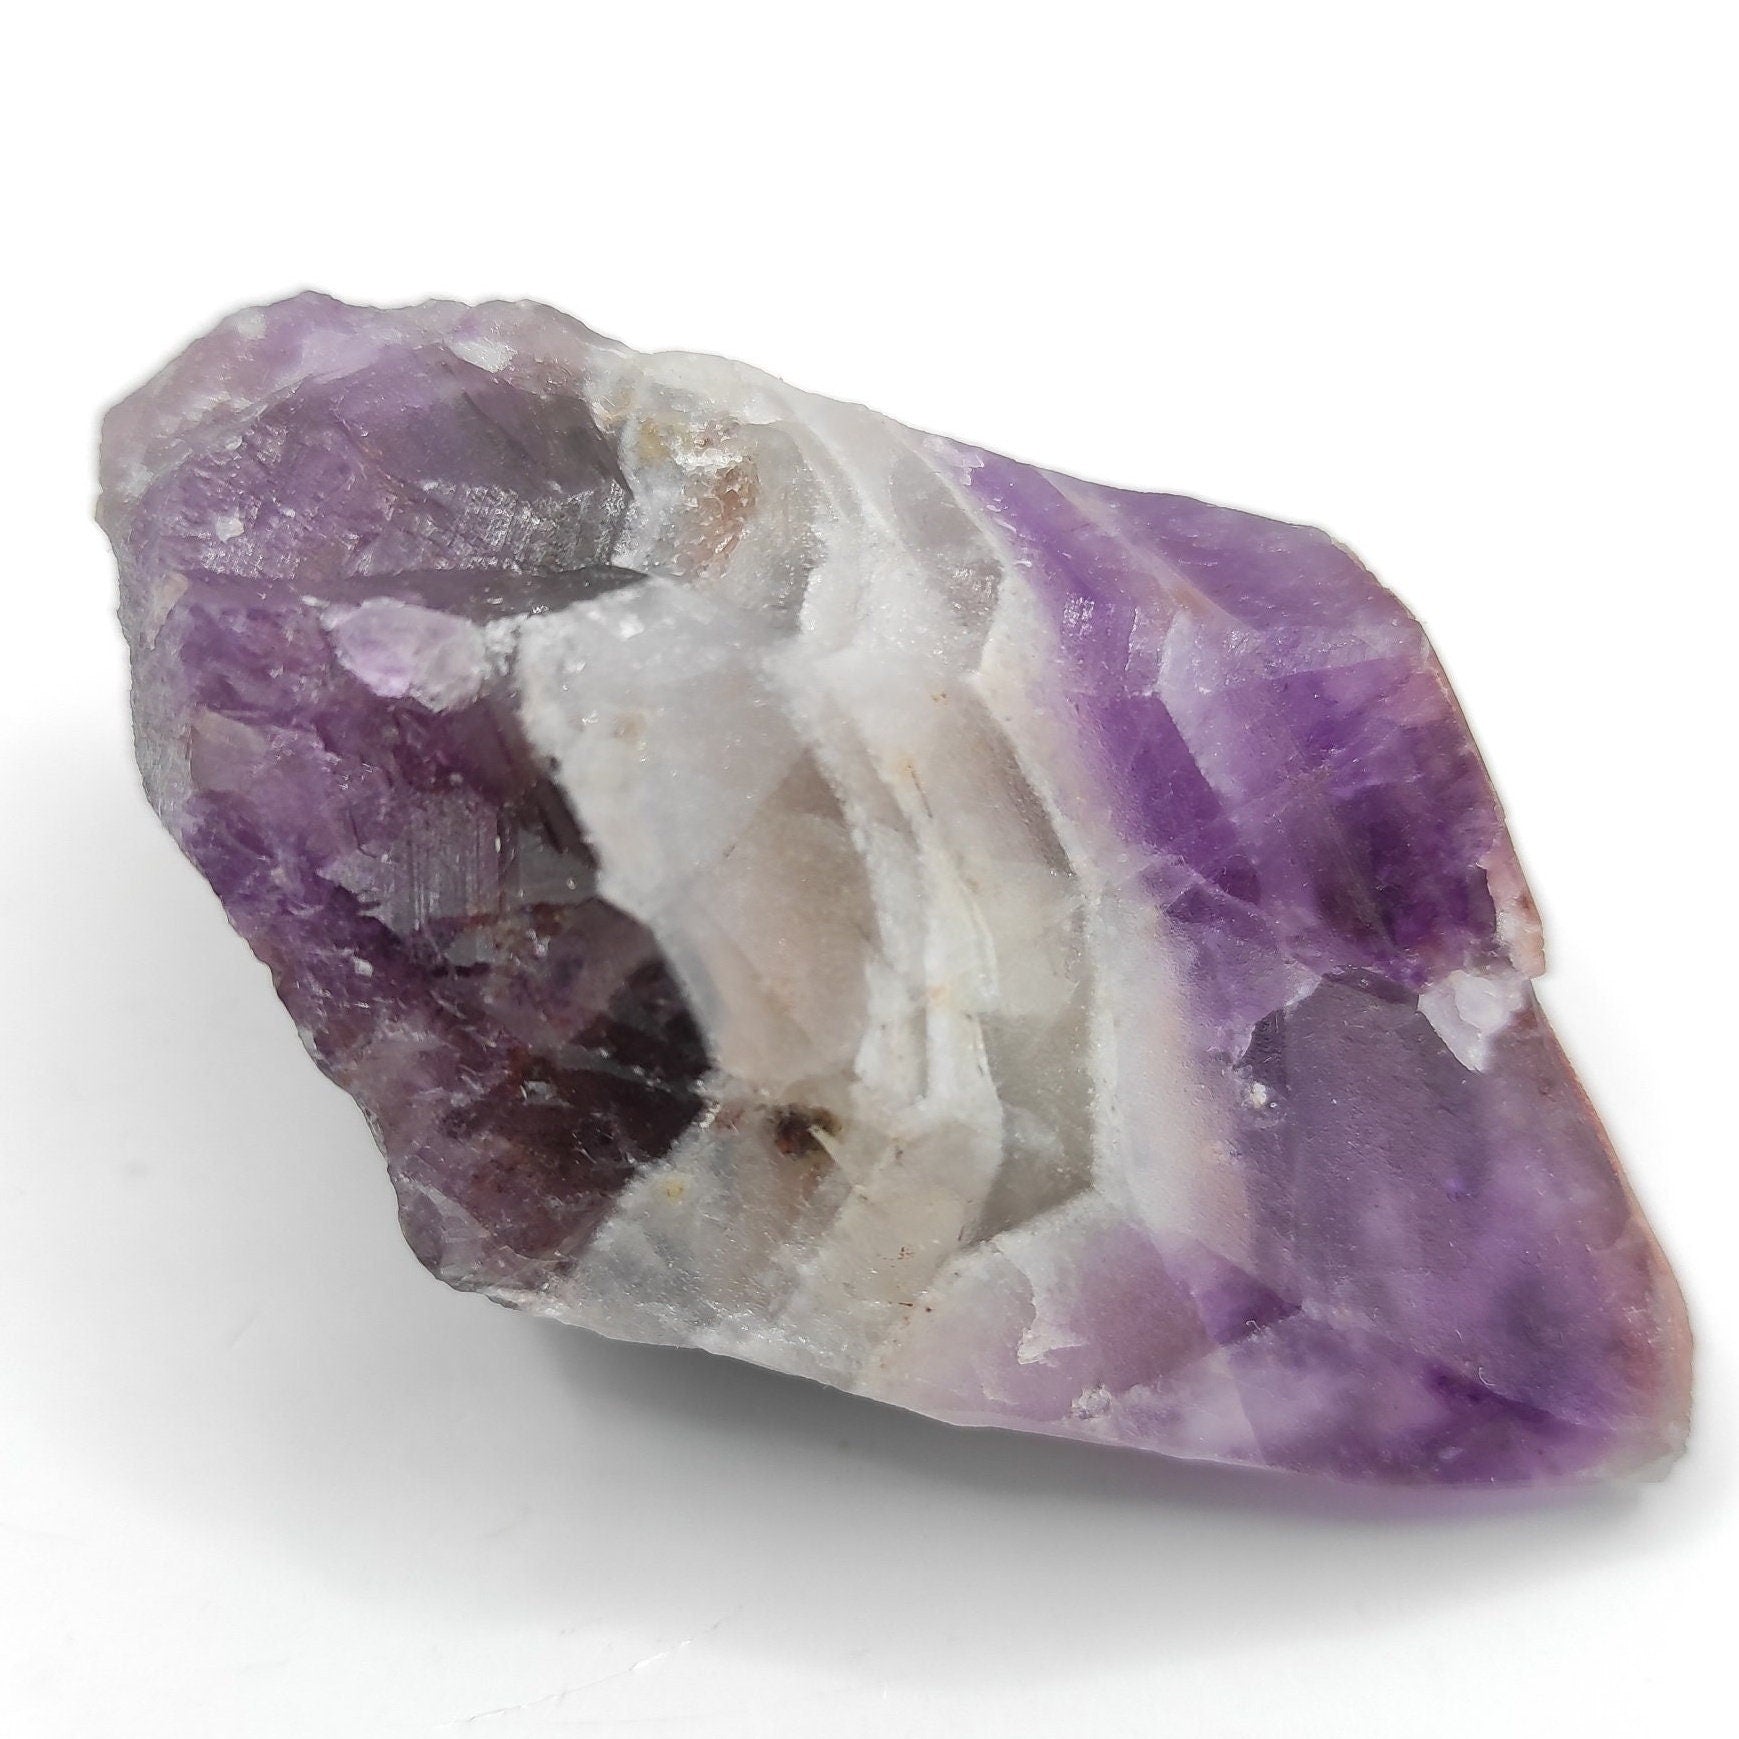 92g Thunder Bay Amethyst - Hematite Coated Amethyst - Canadian Amethyst Crystal - Amethyst Thunder Bay - Red Amethyst - Mineral Specimen